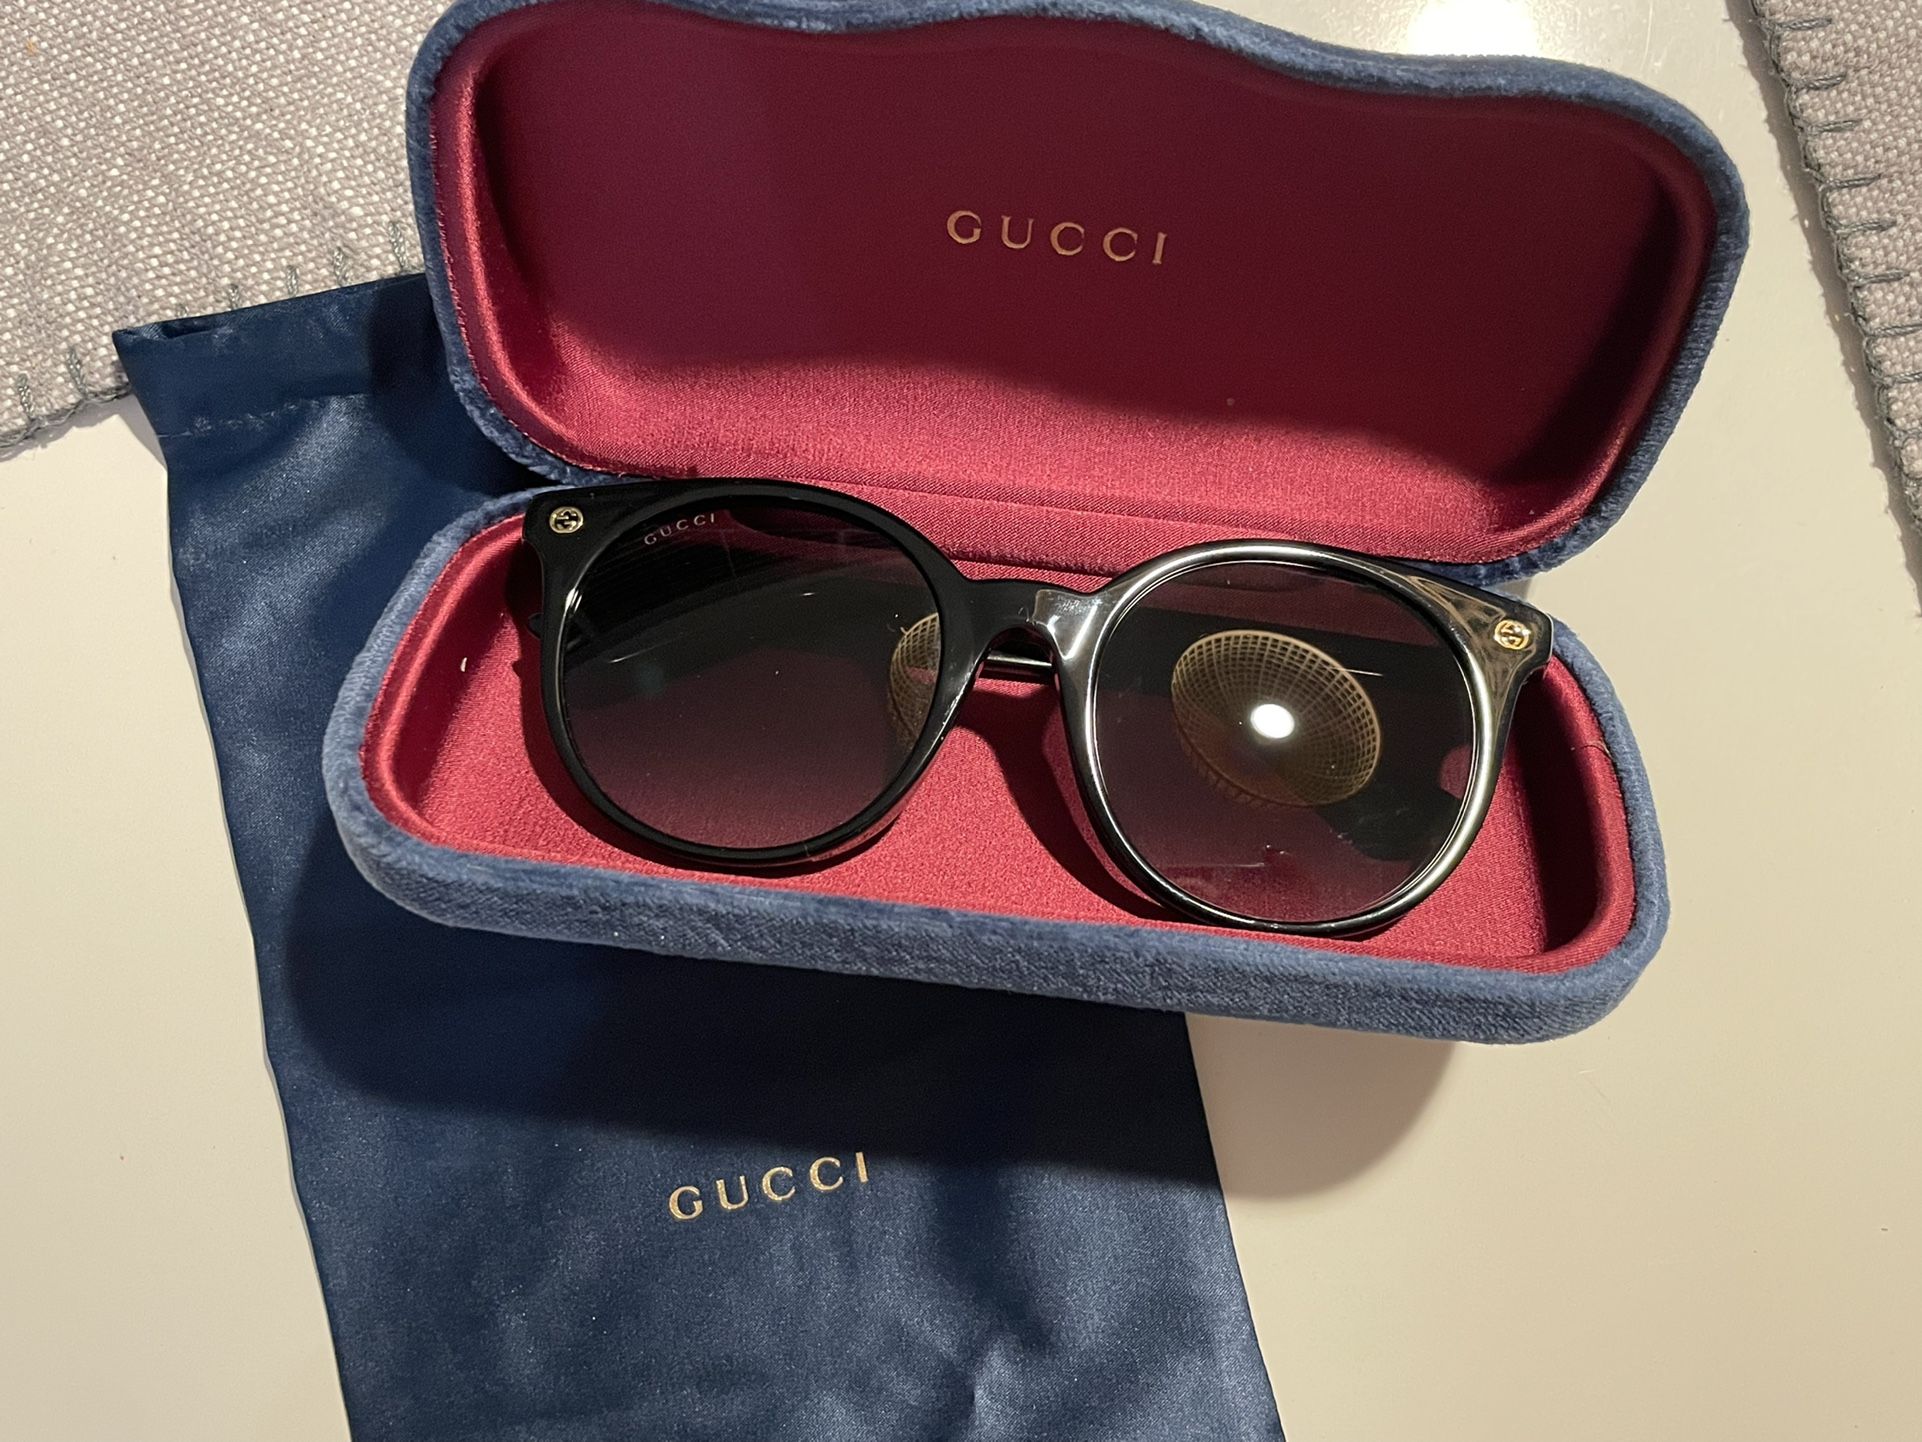 Gucci Women’s Sunglasses New - Never Used GG0091S